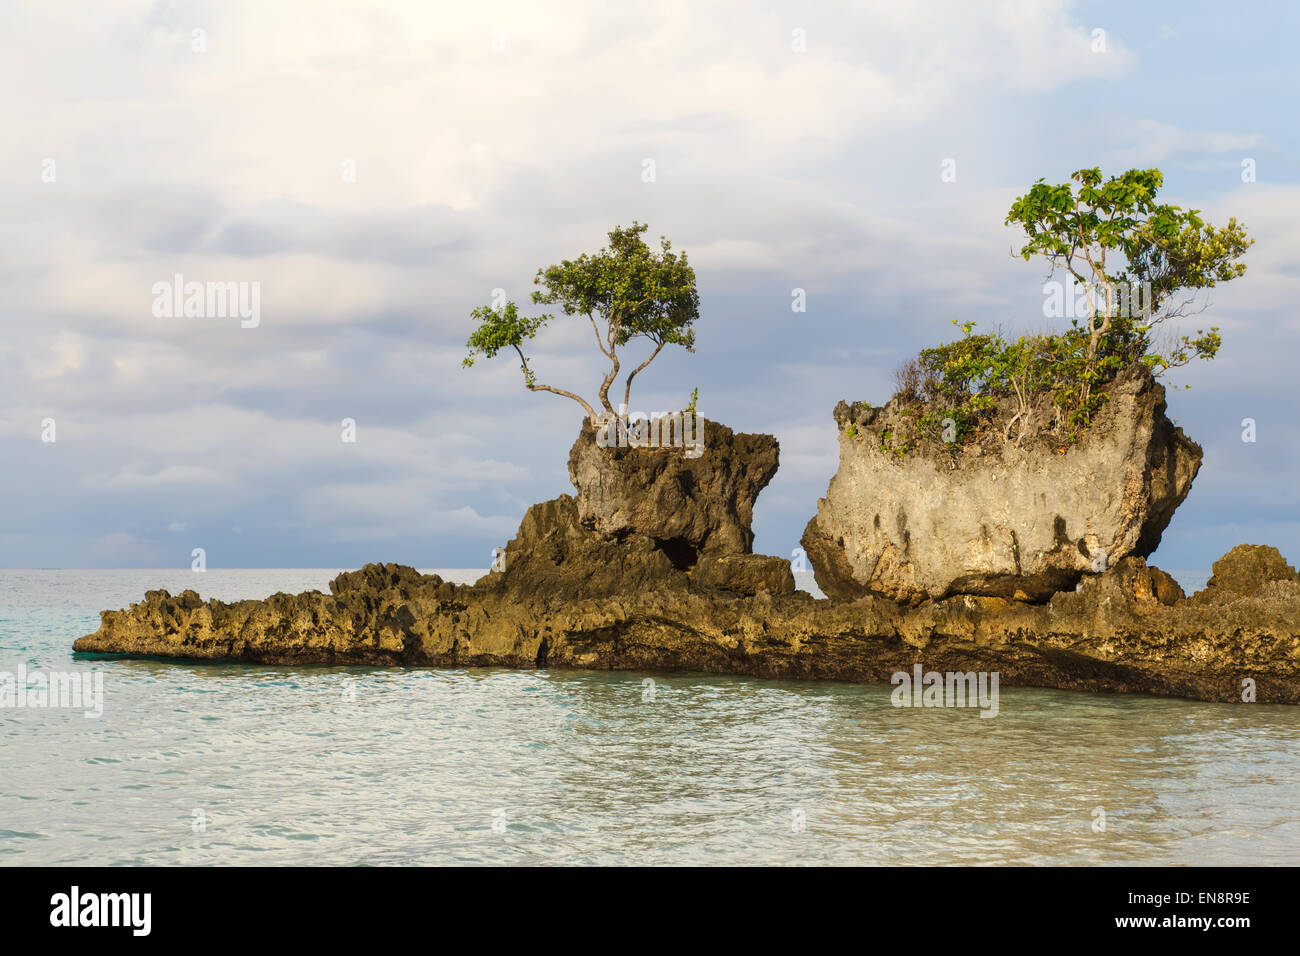 Palmen auf tropischen Felseninsel am blauen Meer, Philippinen Boracay island Stockfoto